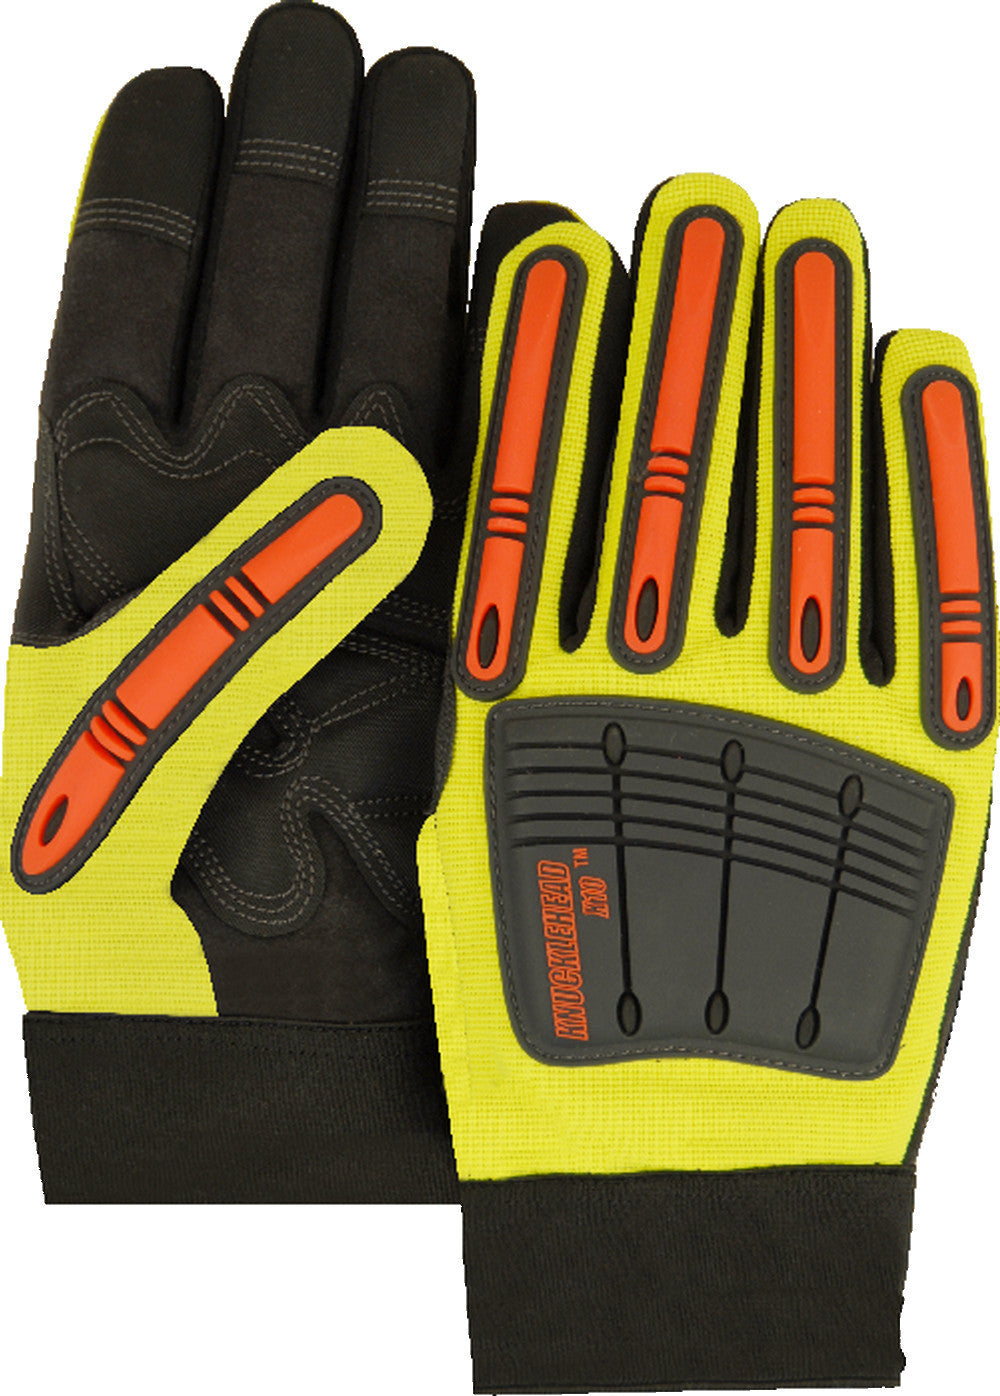 Majestic Knucklehead X10 Armor Skin™ Hi-Vis Mechanics Glove - Work World - Workwear, Work Boots, Safety Gear